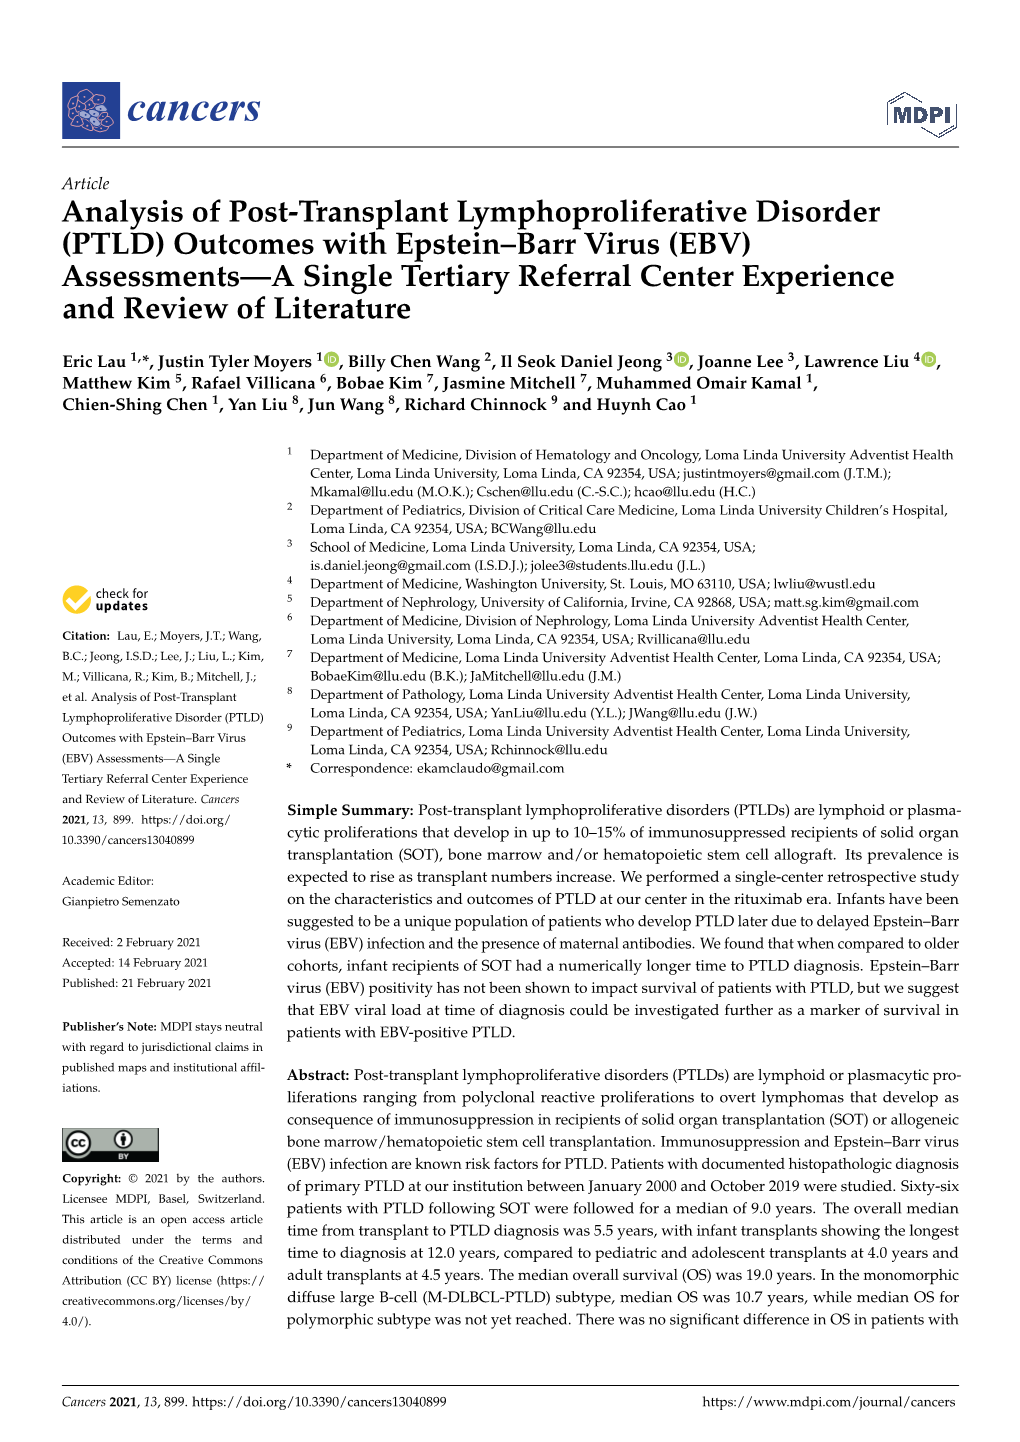 Analysis of Post-Transplant Lymphoproliferative Disorder (PTLD)